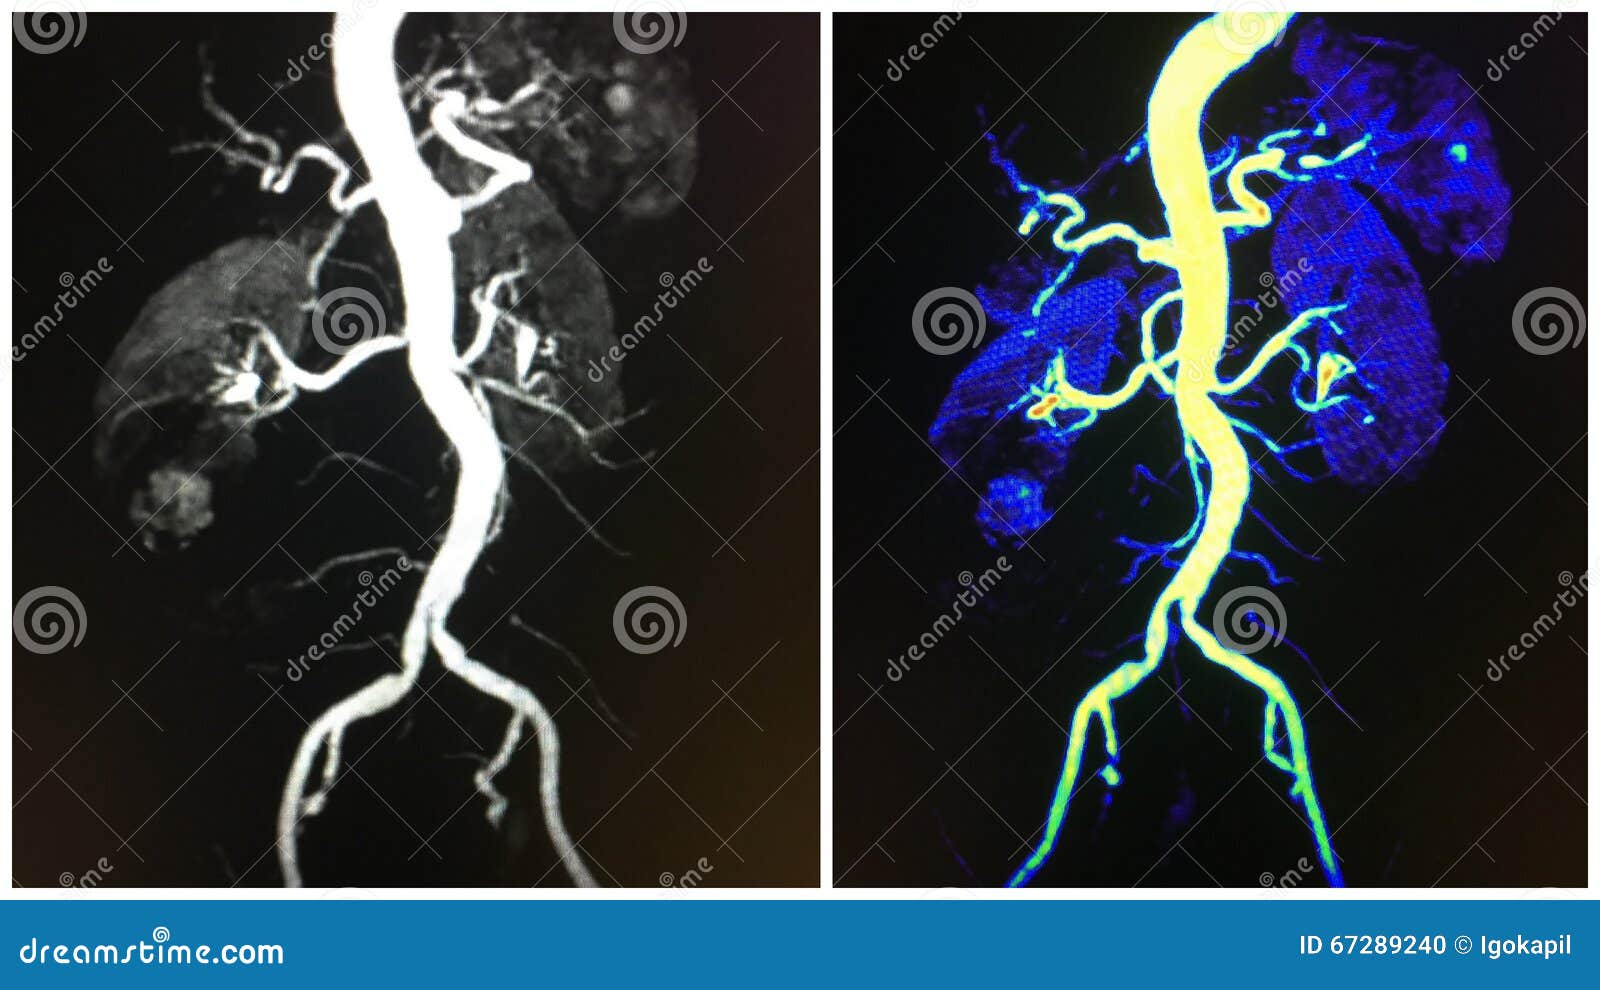 aorta renal arteries kidneys mra collage